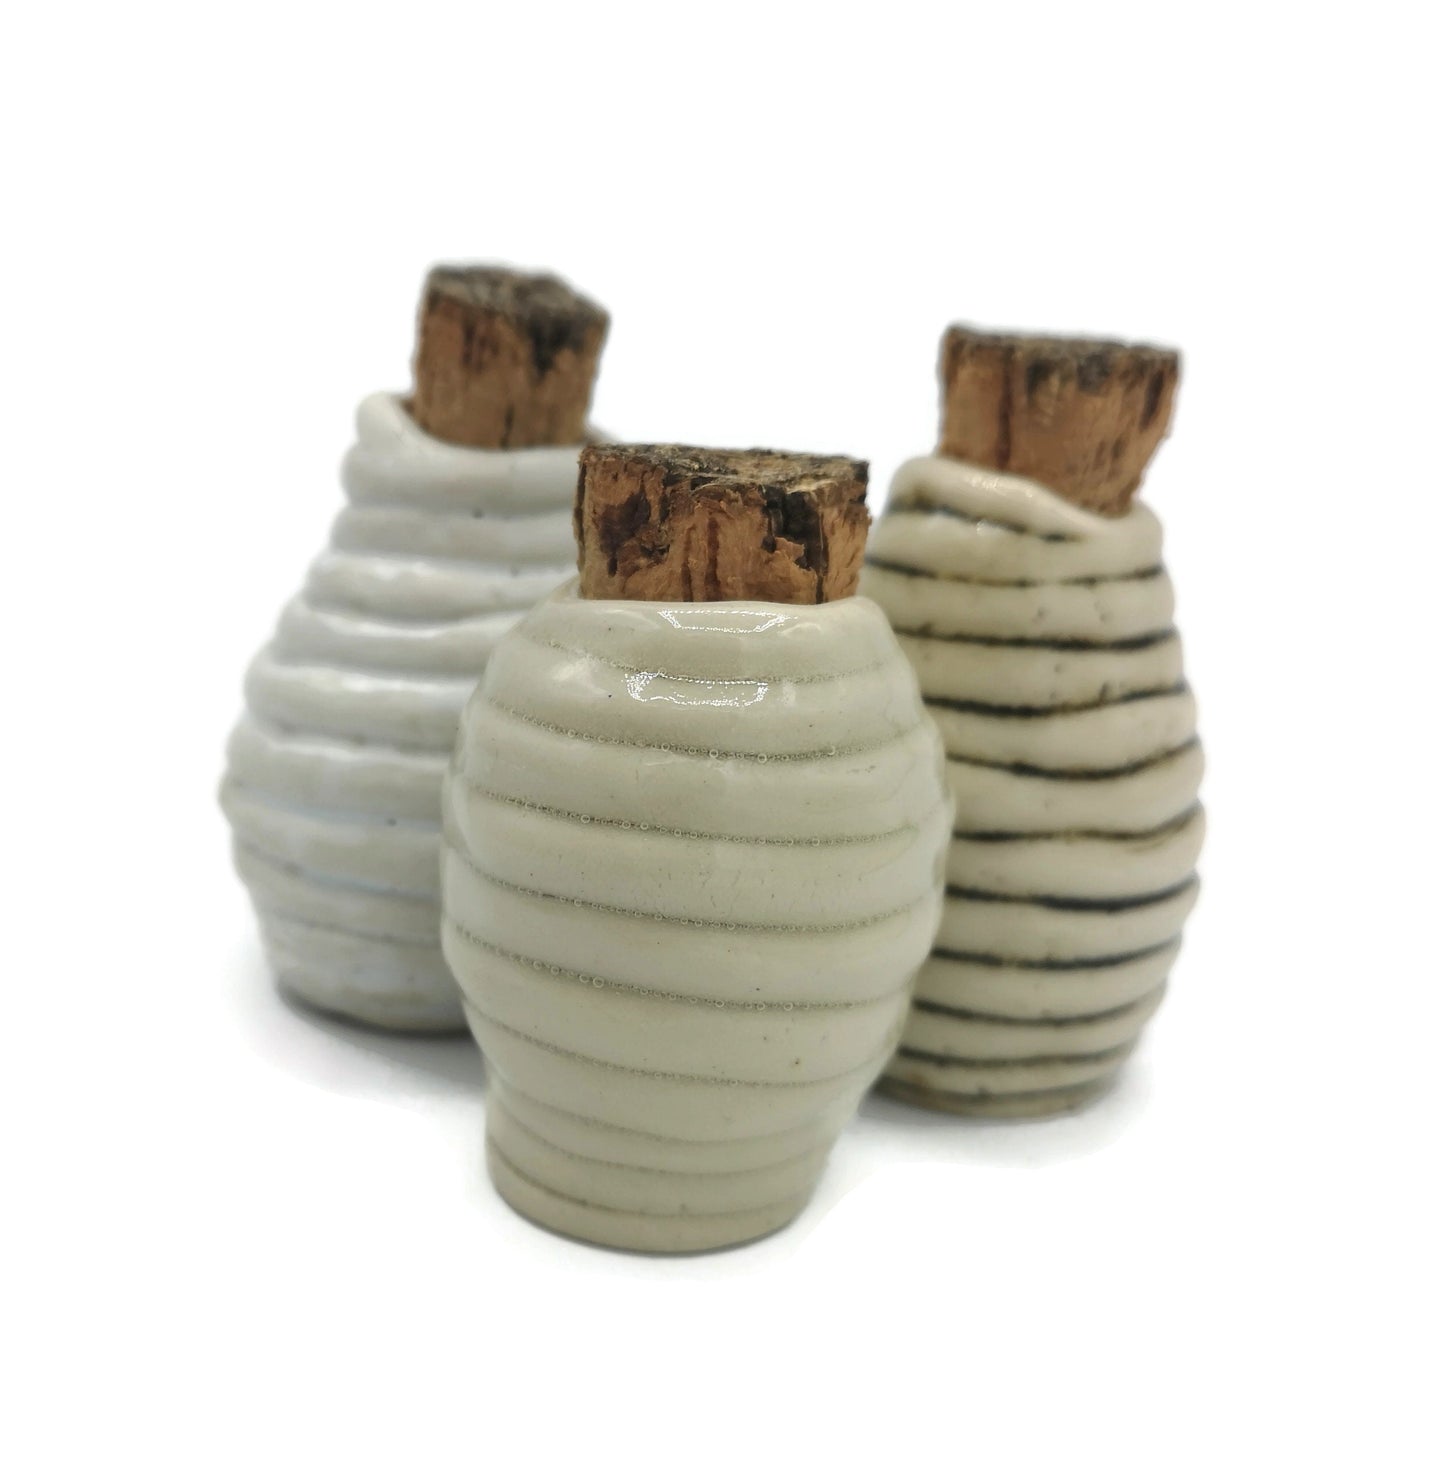 Small Ceramic Vase Set Of 3, Handmade Ceramic Bottle With Cork Stopper, Textured Pottery Mom Birthday Gift From Daughter - Ceramica Ana Rafael